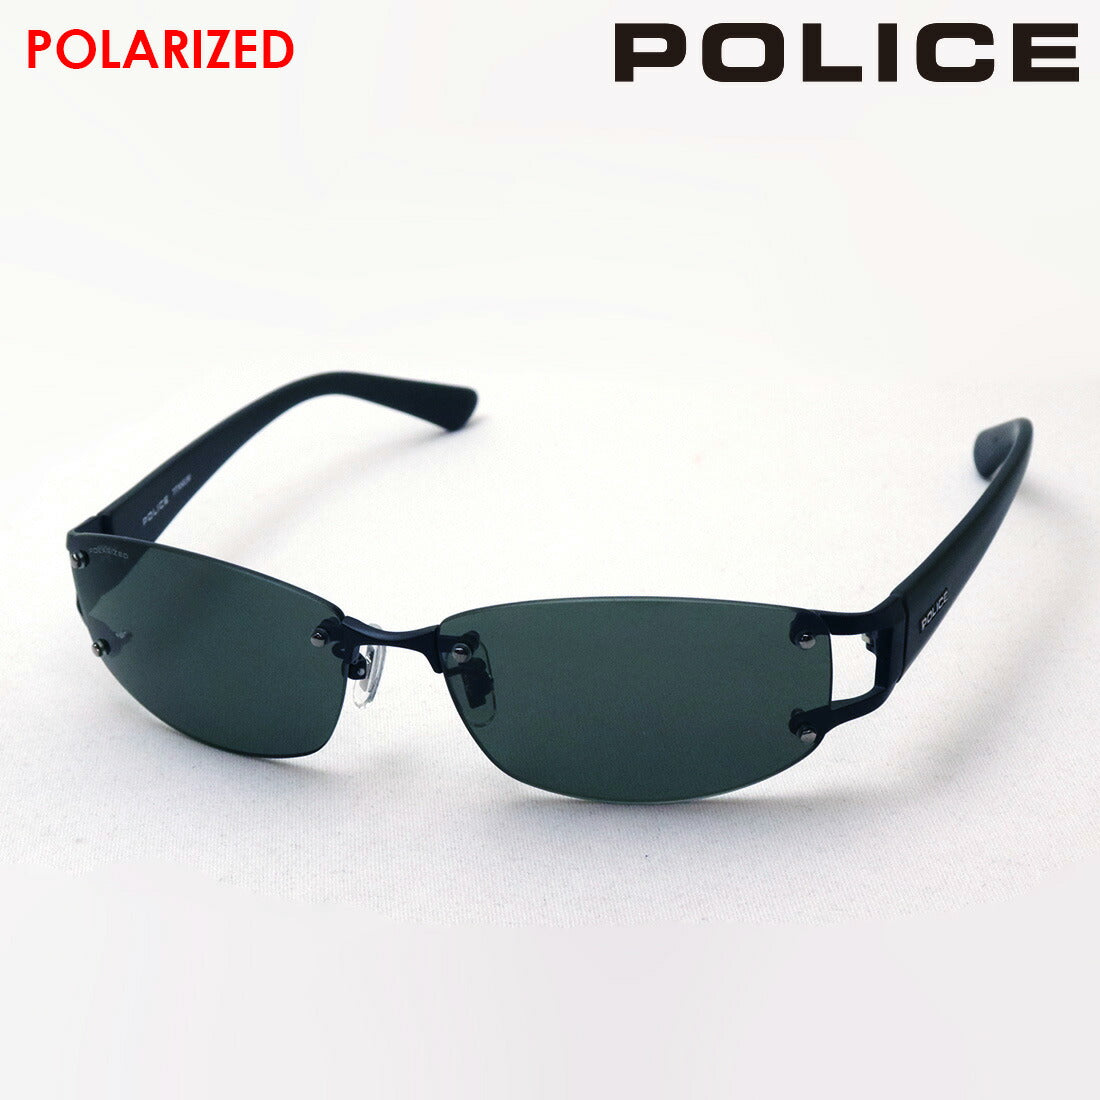 SALE Police Polarized Sunglasses Police SPLC60J 531P DRIVER 